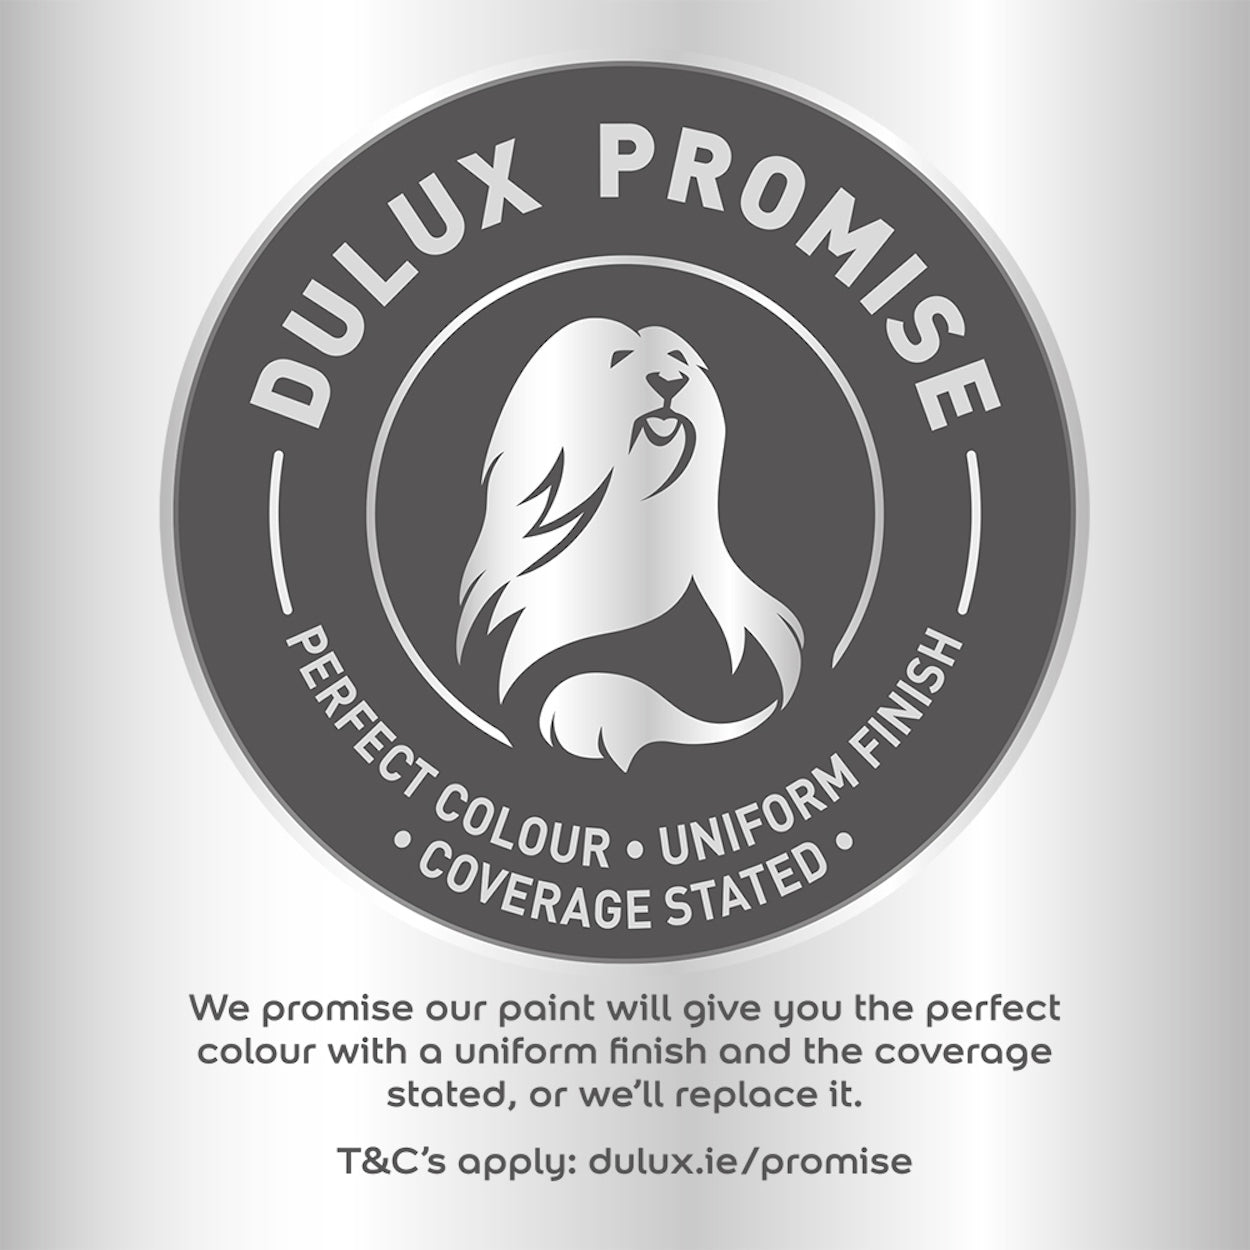 Dulux High Gloss Vermillion 2.5L